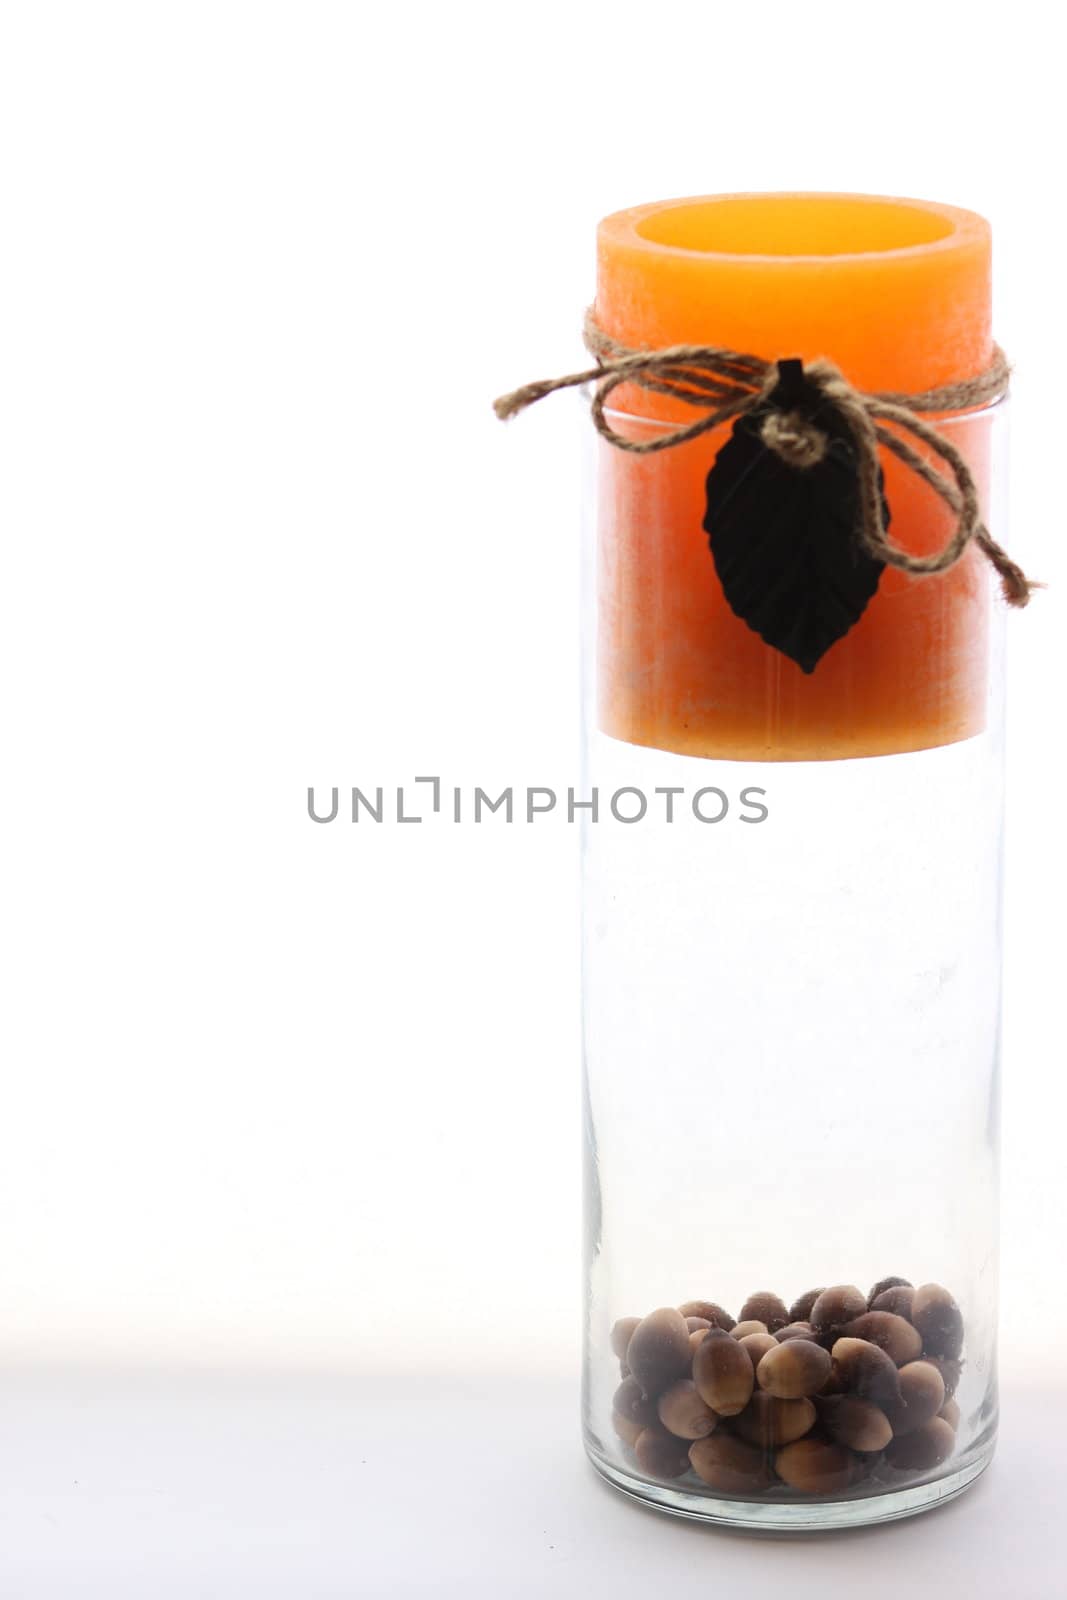 Orange candle in glass vase with acorns sitting on bottom.